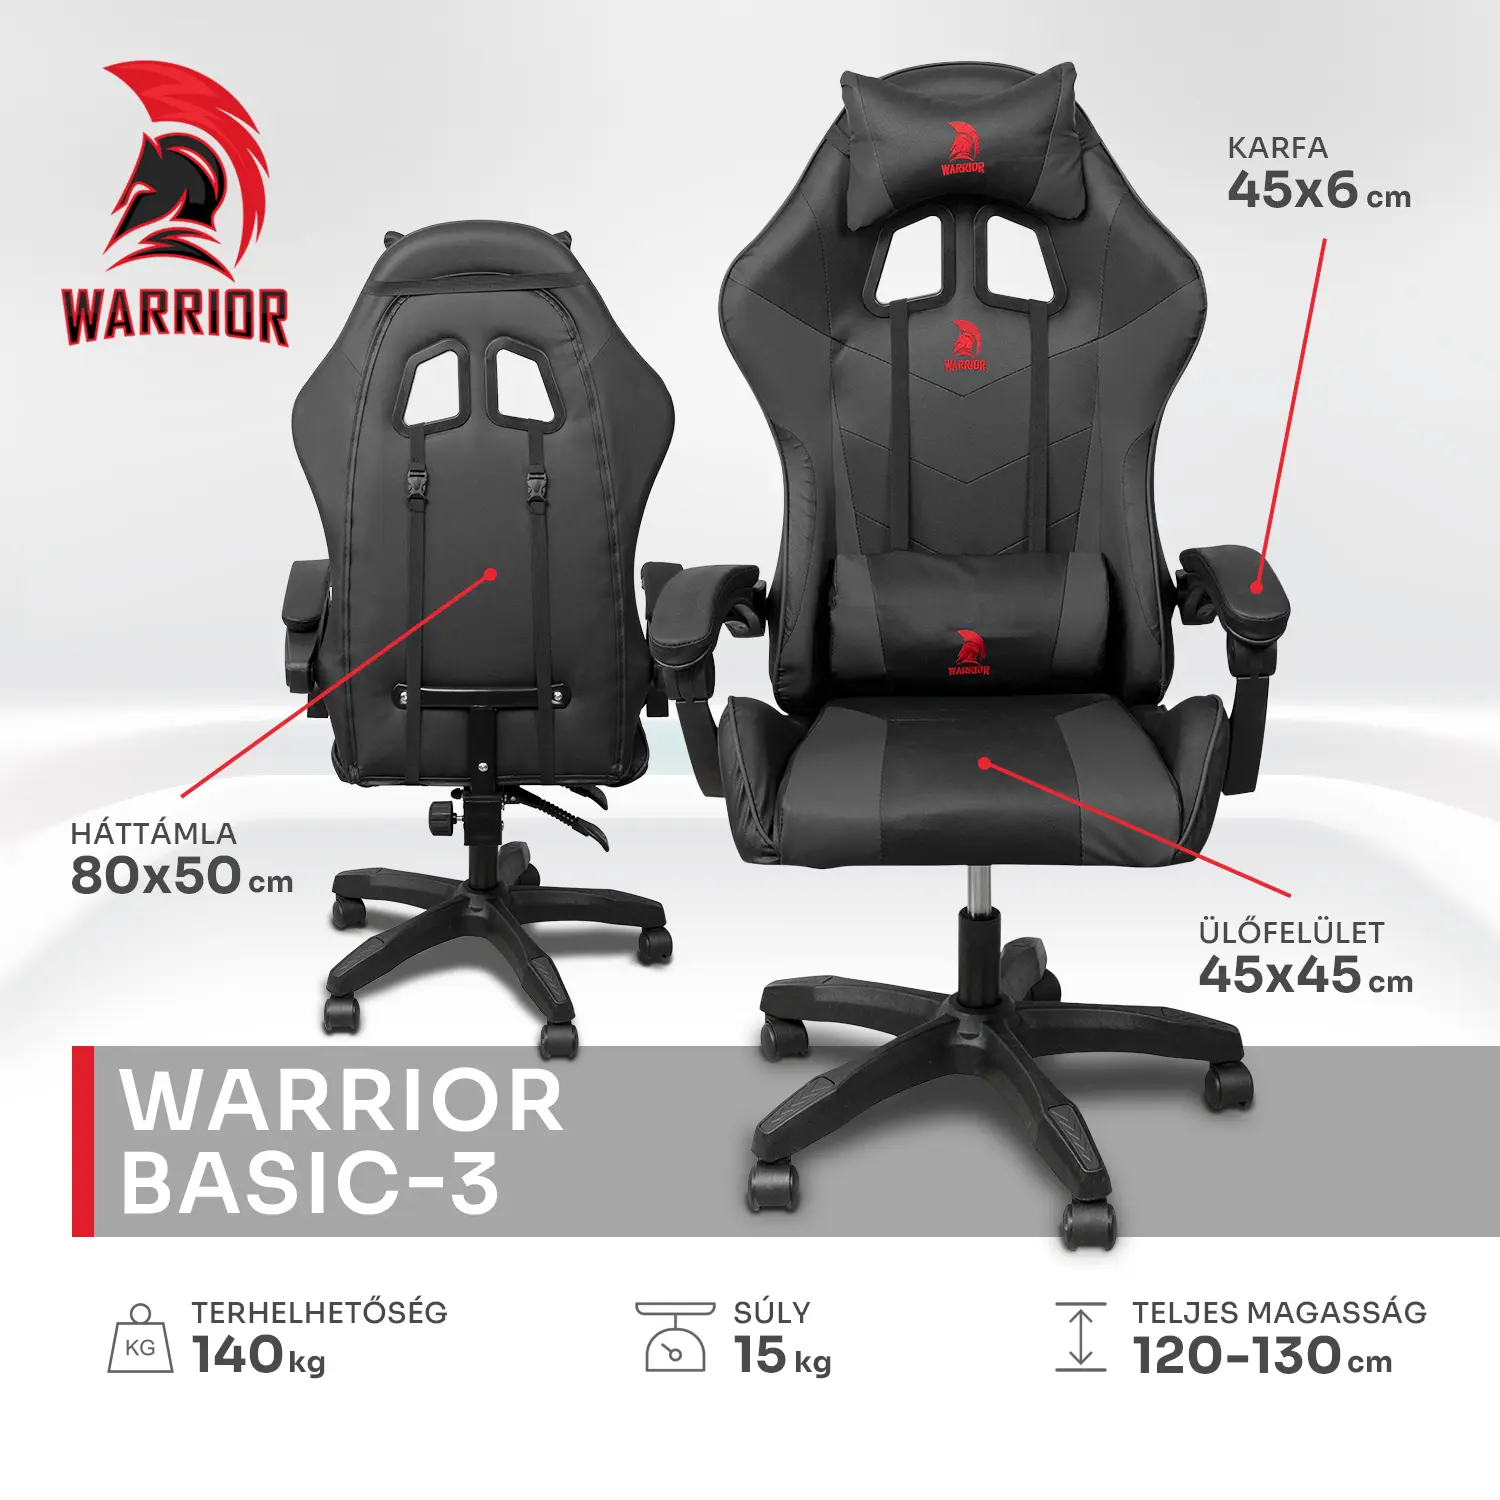 Warrior gamer szék, forgószék fekete (GAMER-BASIC-3-BLACK)